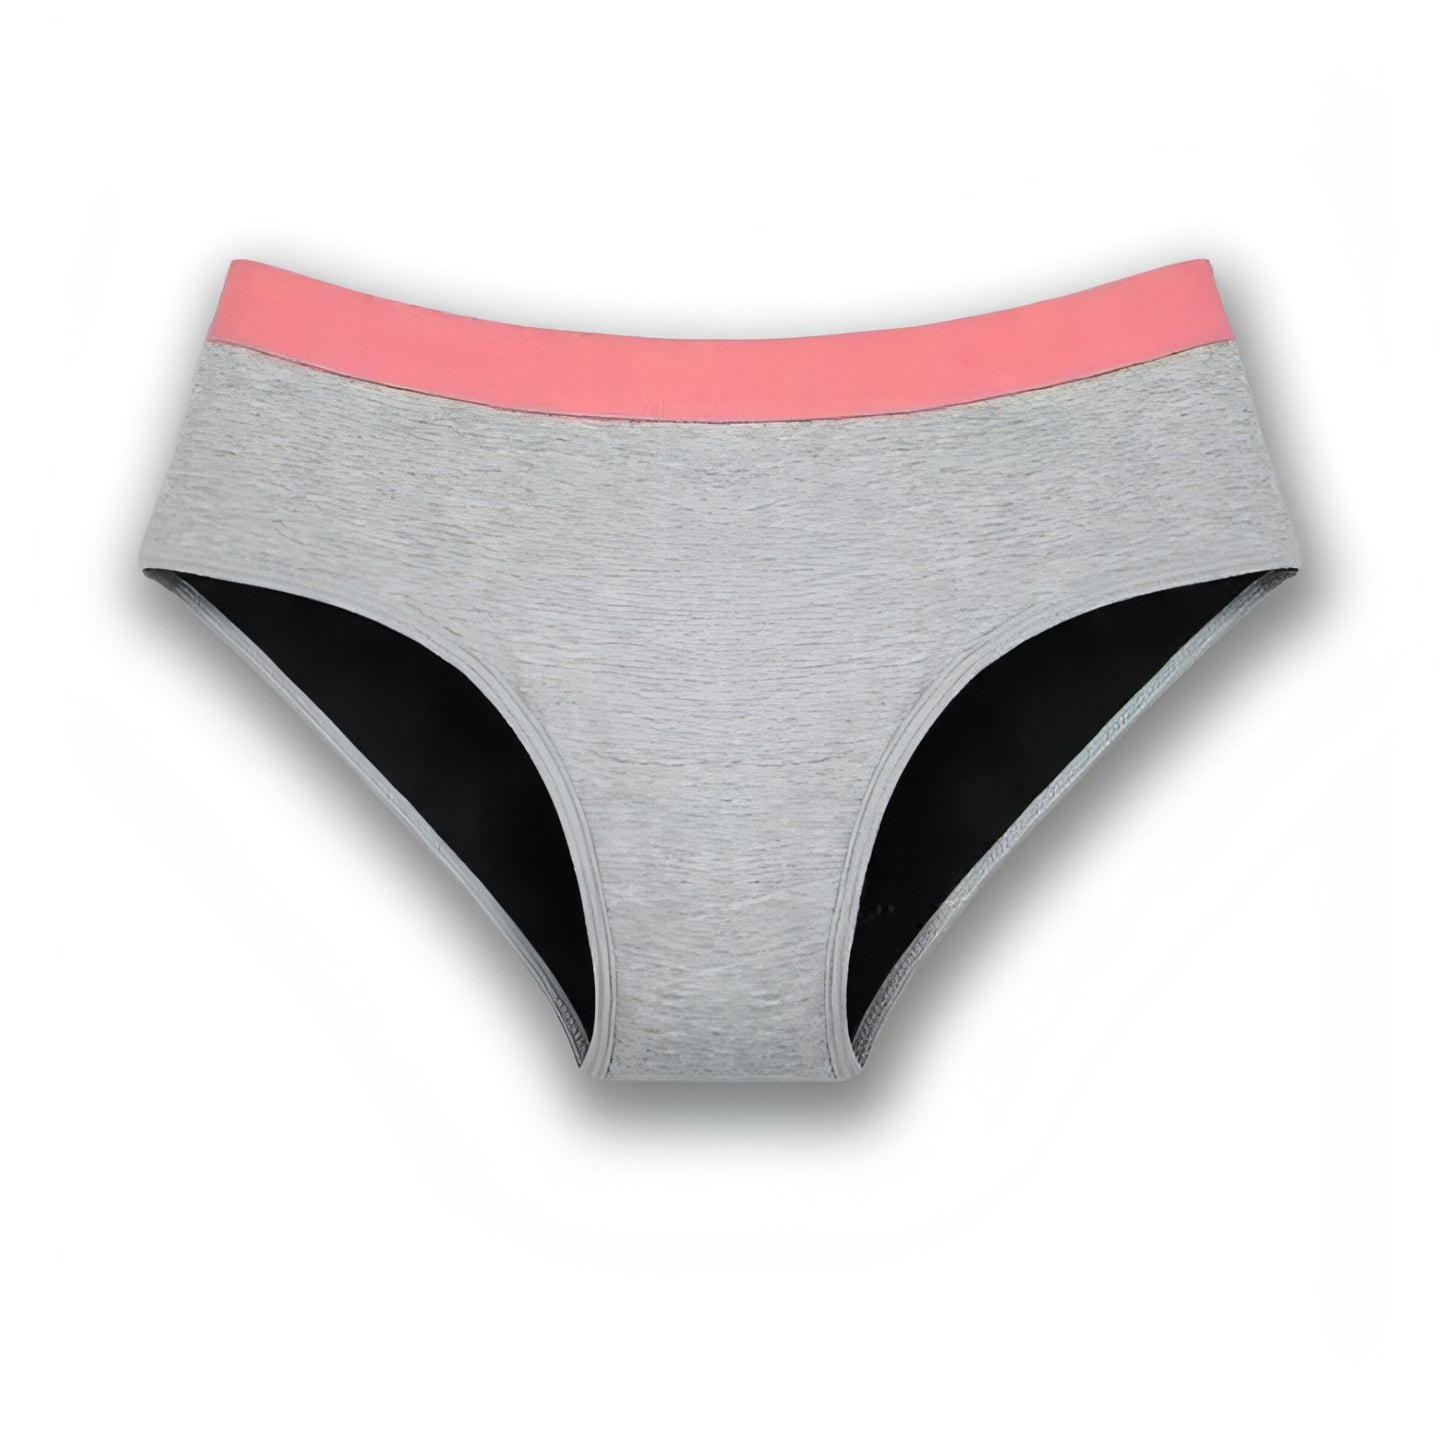 Teen Bikini - Cloudy Grey Period Undies - Premium Period Underwear from Petal & Flo in NZ - Just $29.99! Shop now at Petal & Flo